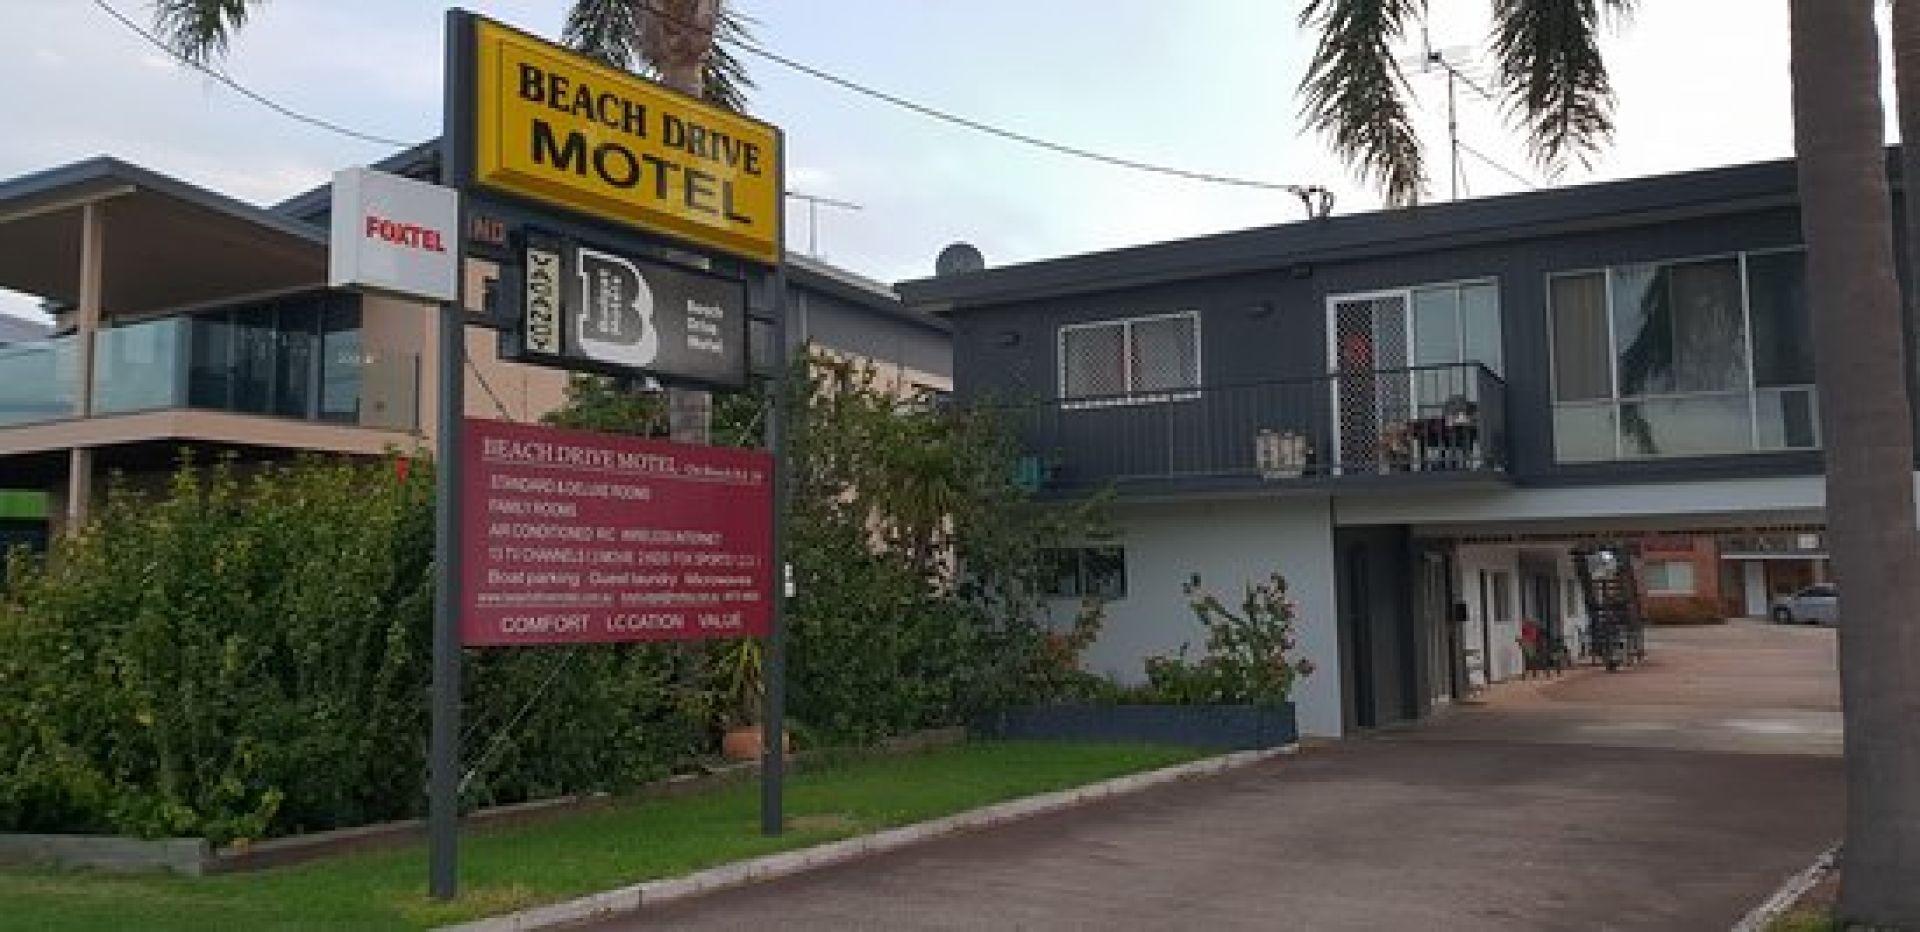 3 bedrooms Apartment / Unit / Flat in 24 Beach Road BATEMANS BAY NSW, 2536